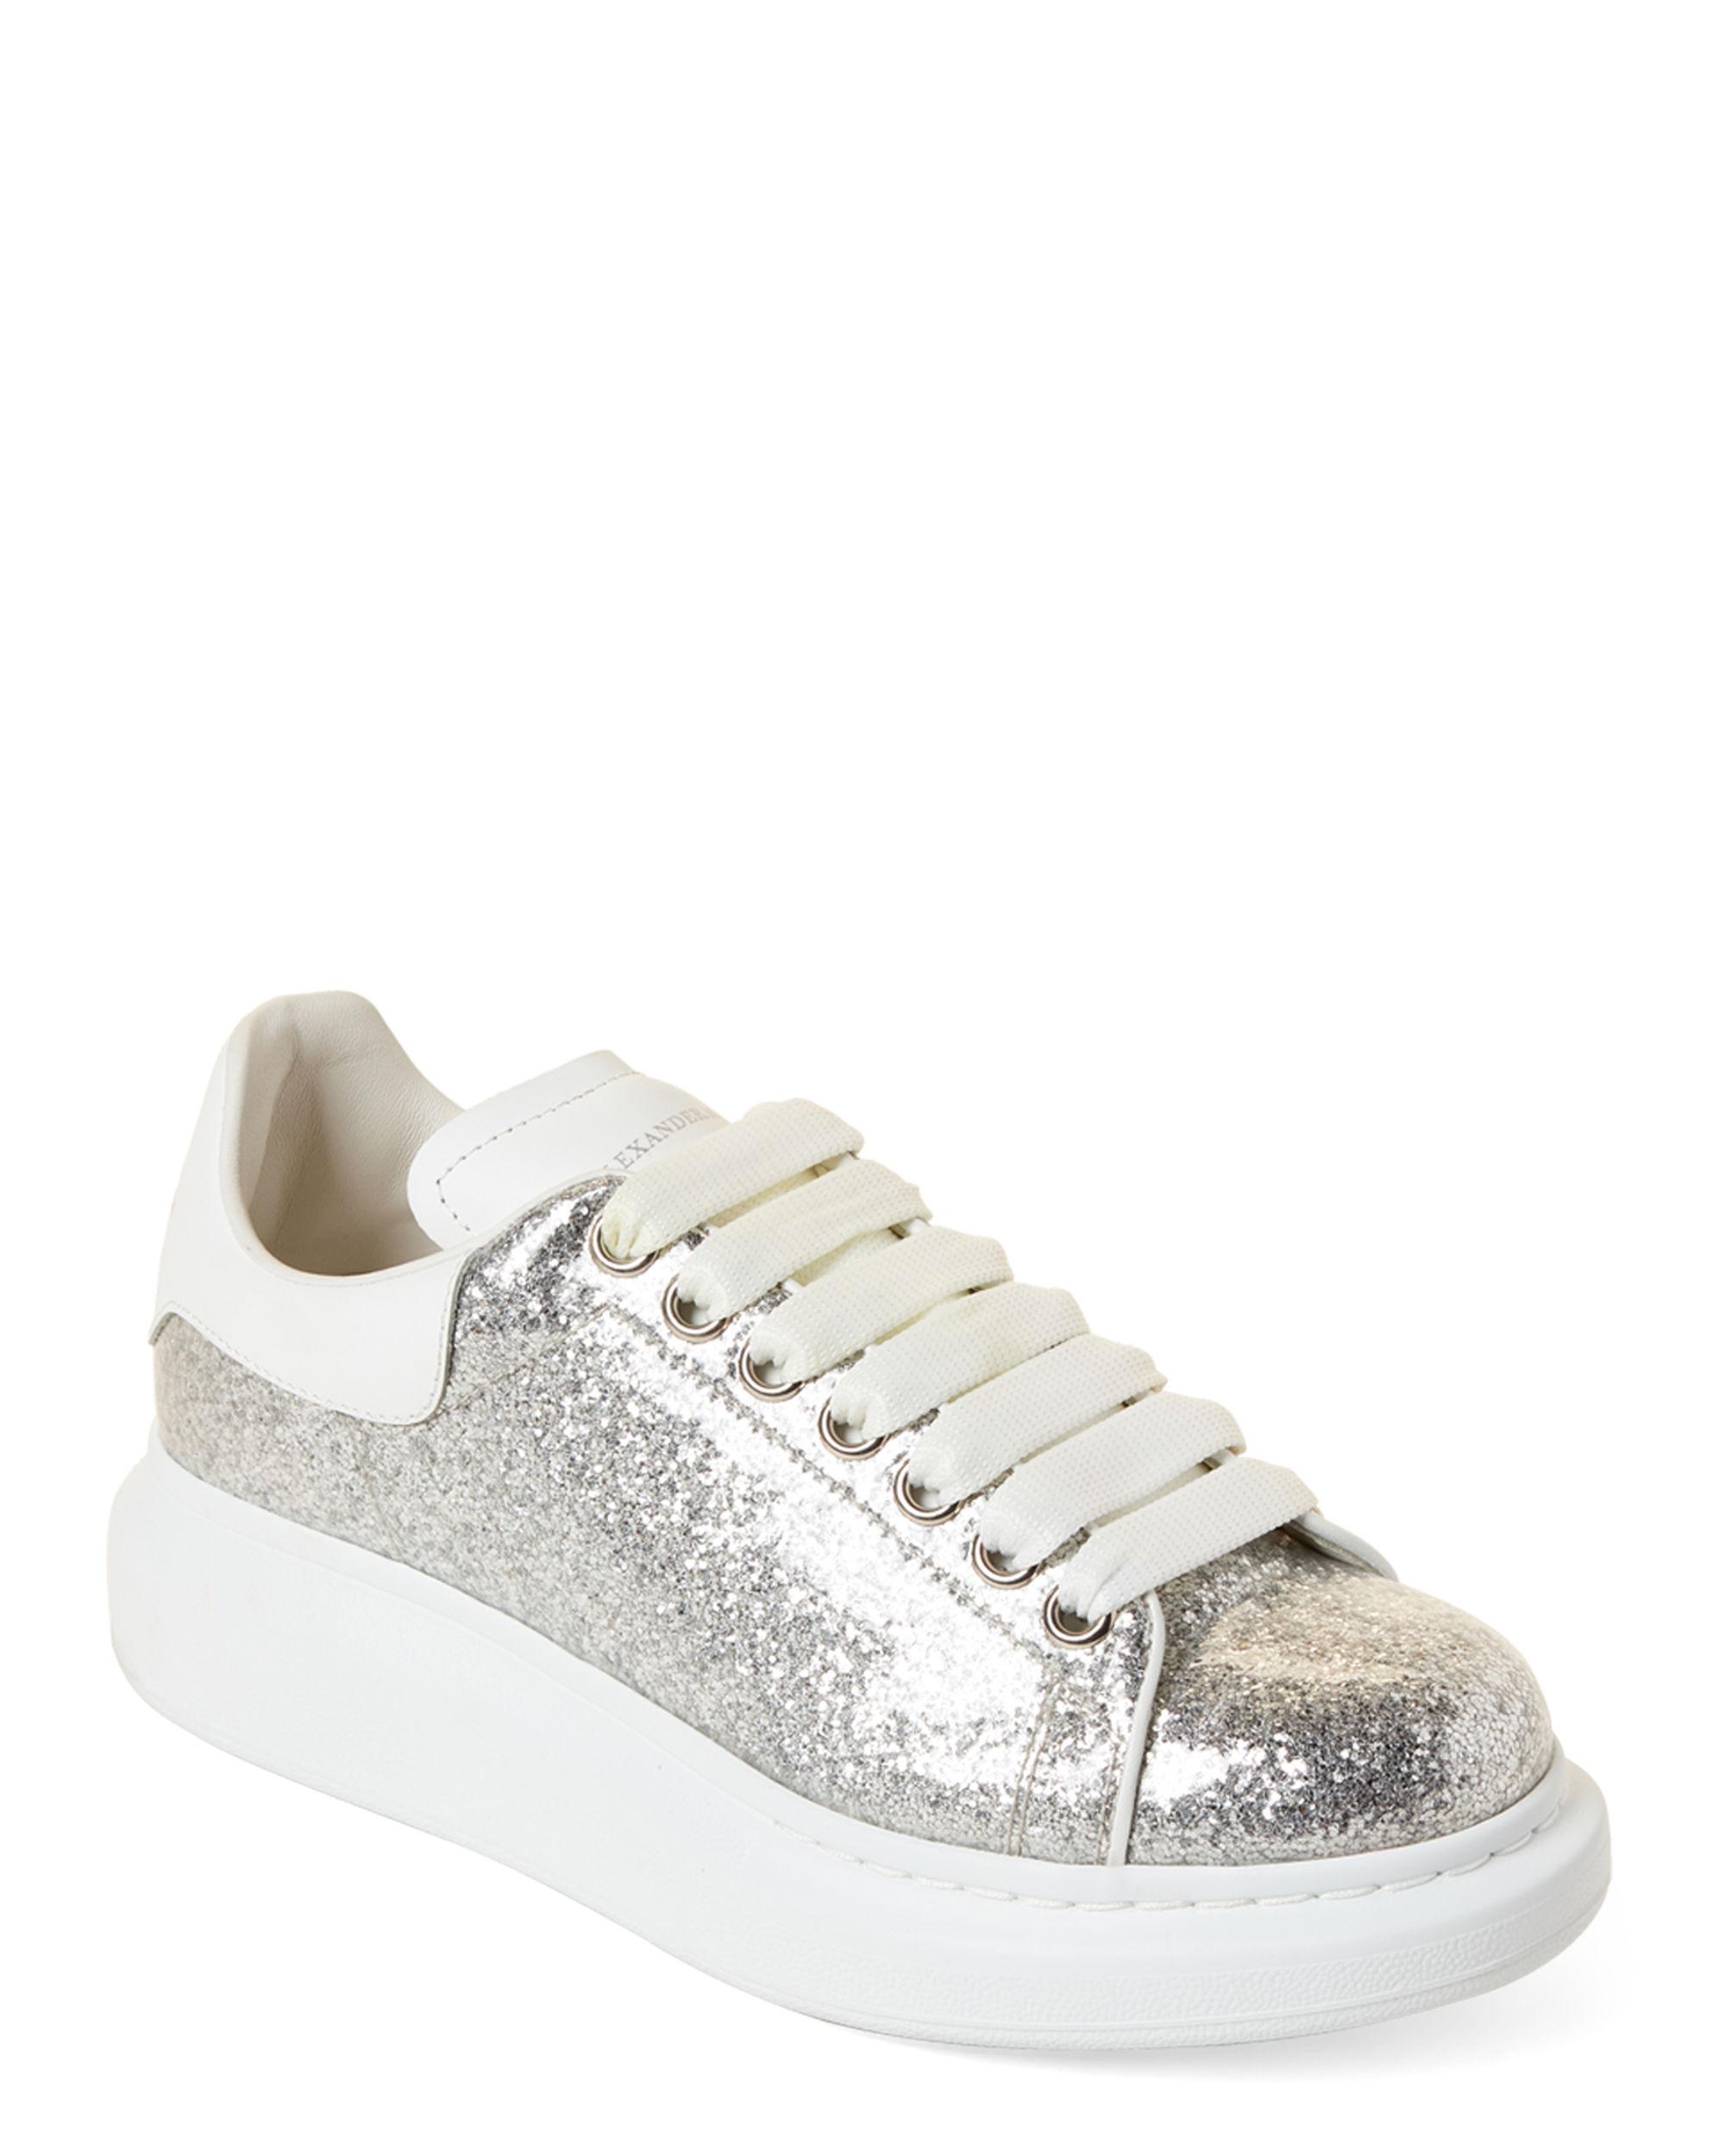 Lyst - Alexander McQueen Silver & White Glitter Platform Sneakers in White